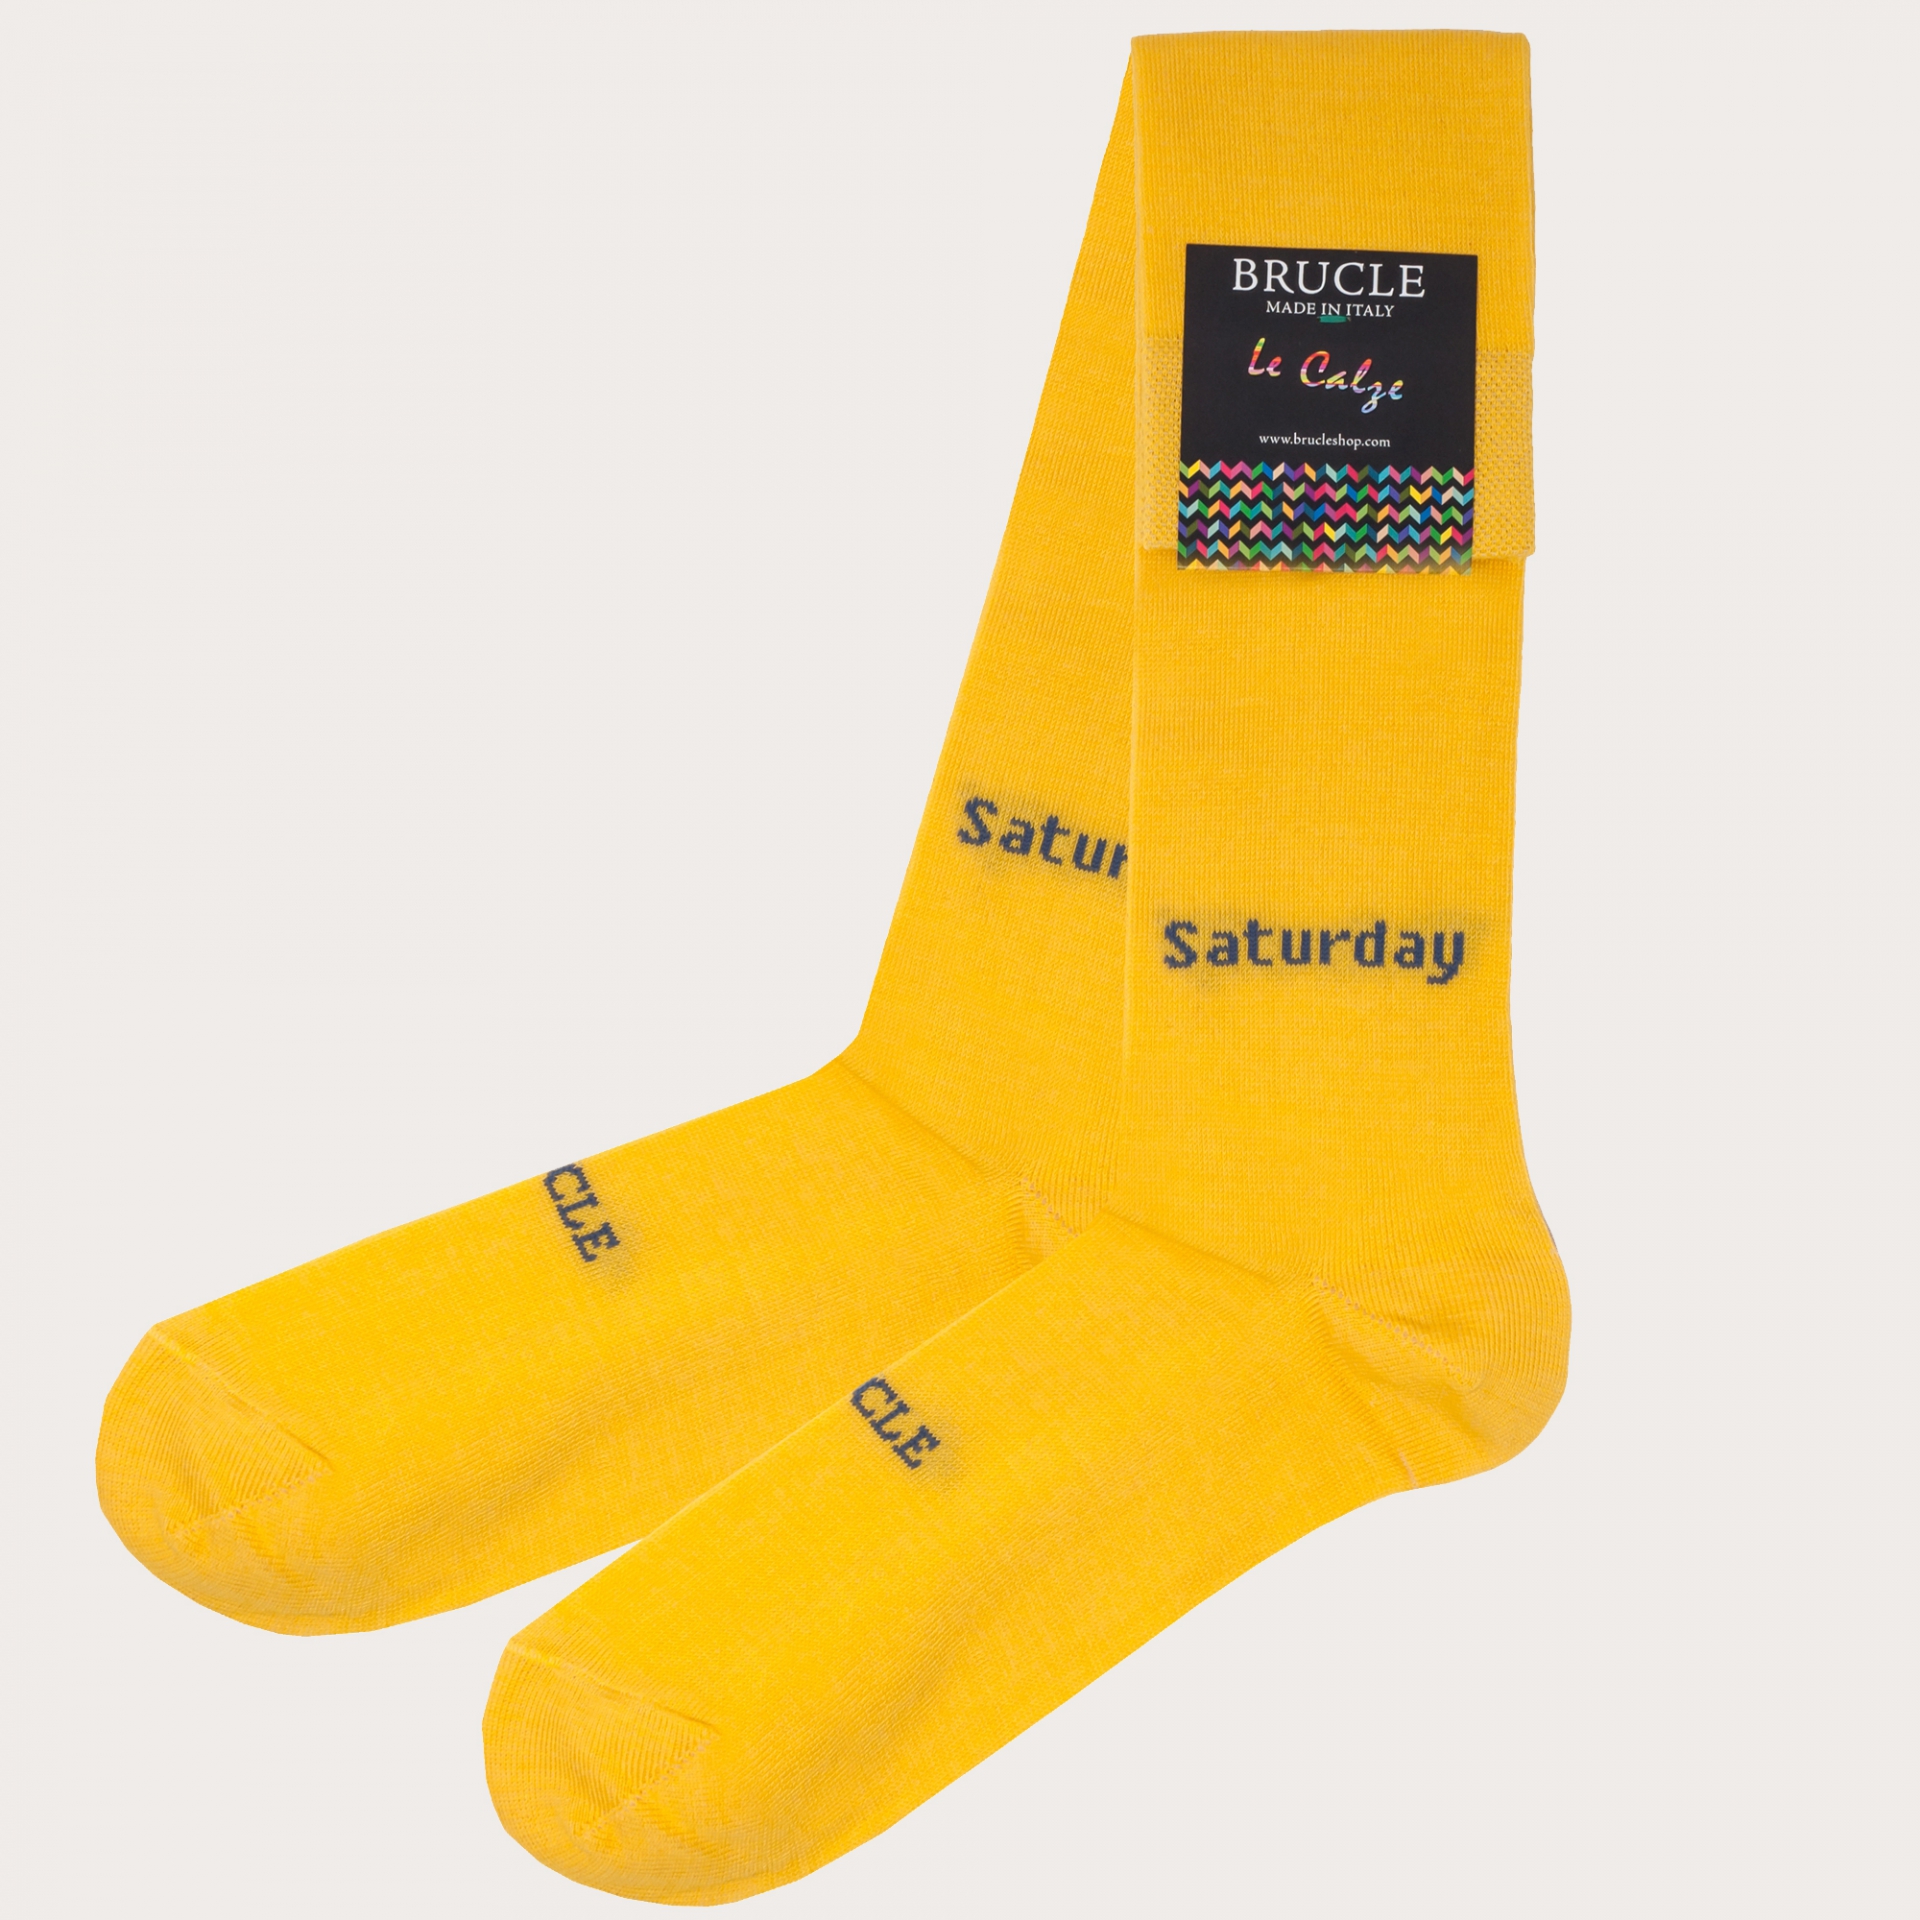 BRUCLE Socks, "Saturday"